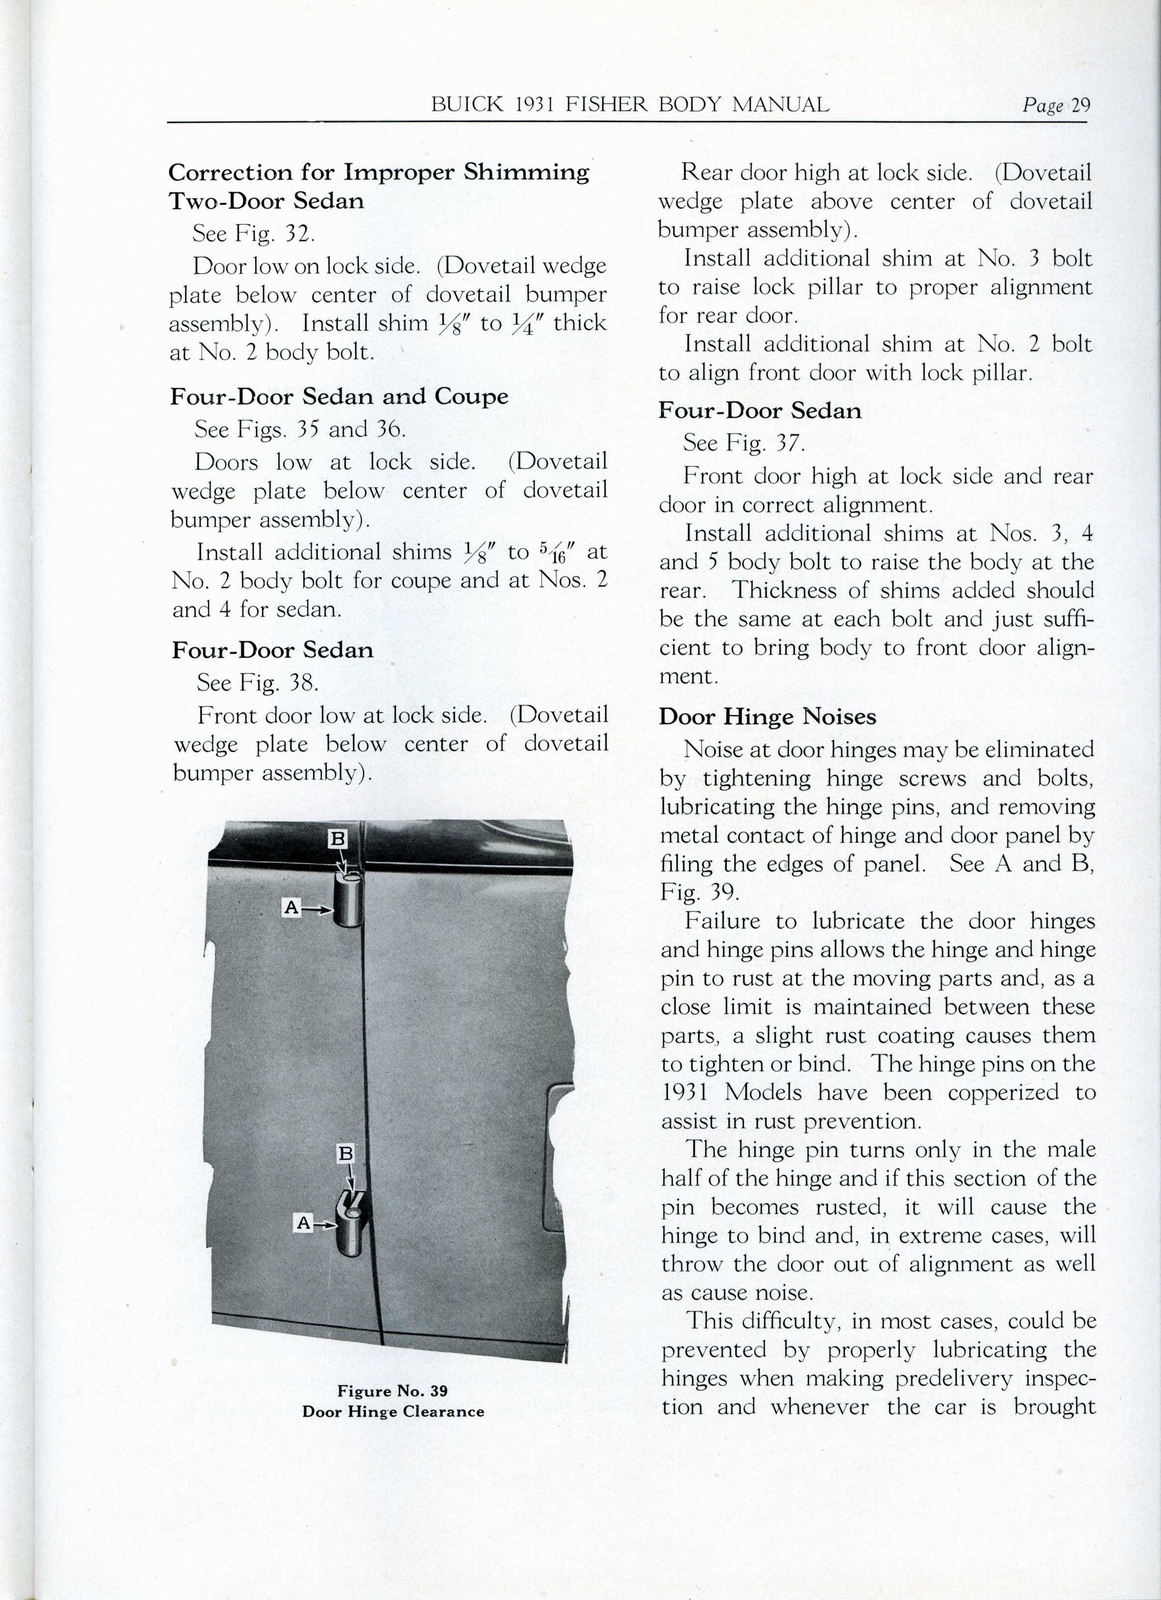 n_1931 Buick Fisher Body Manual-29.jpg